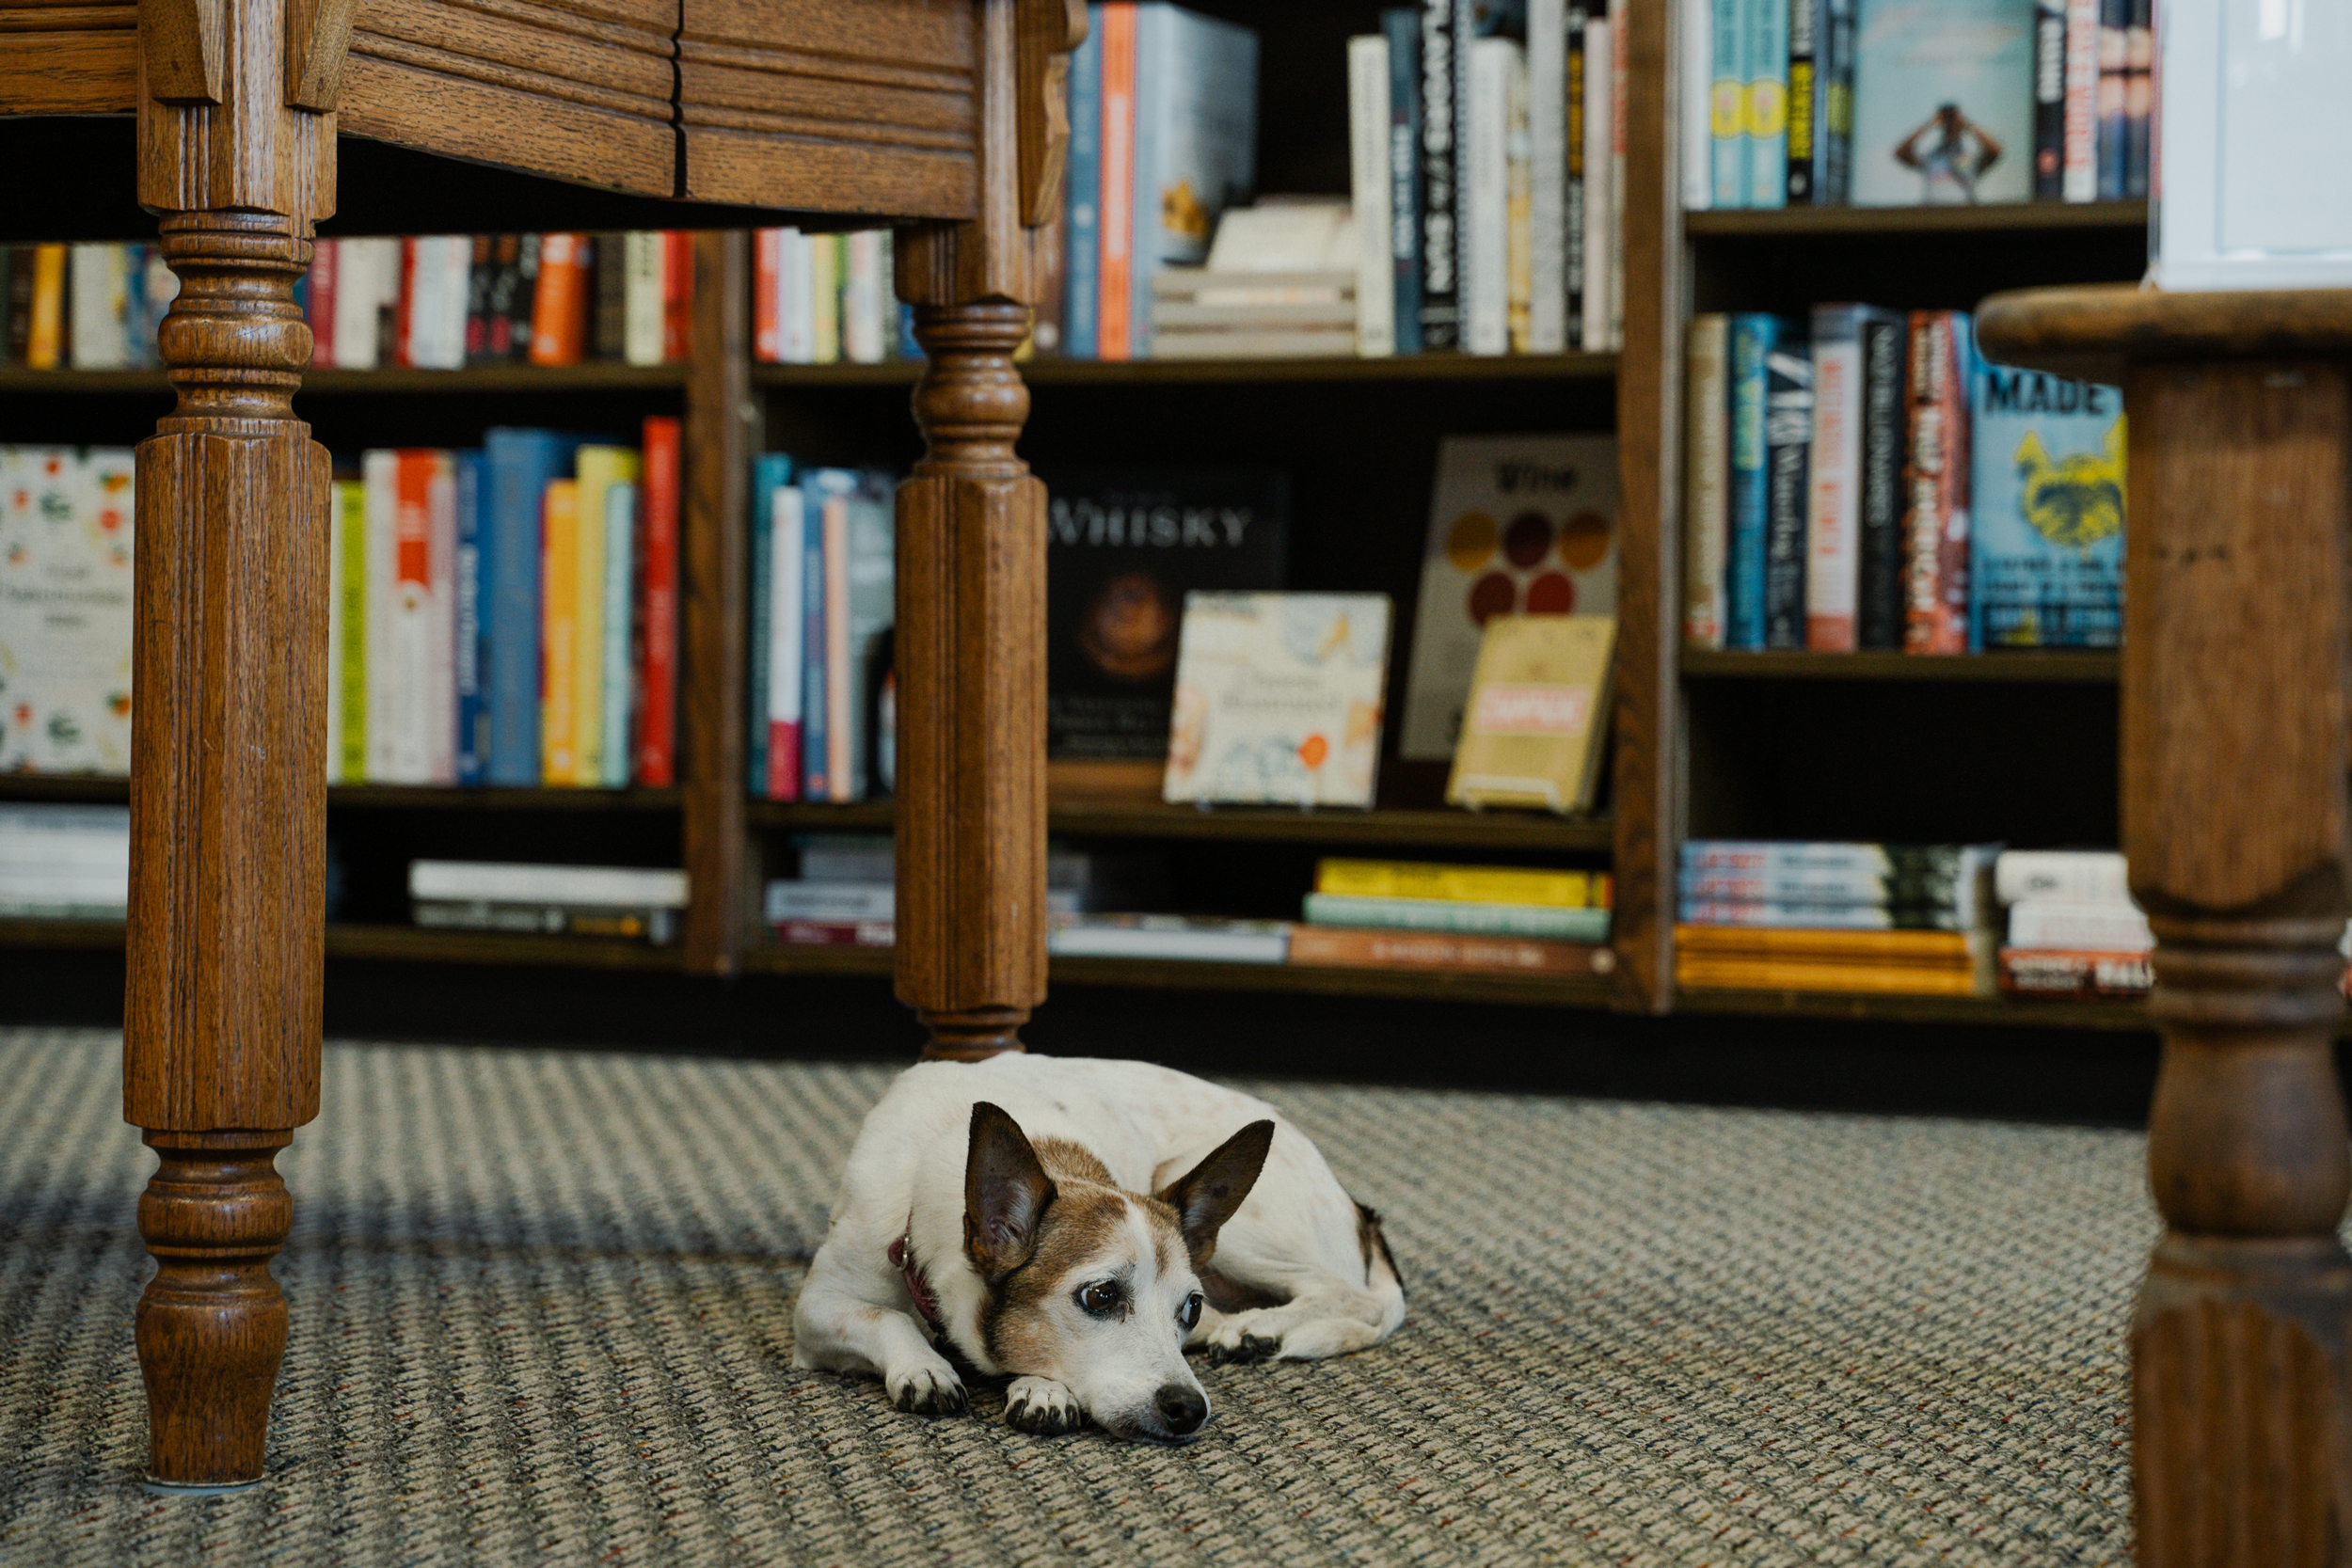 Valerie Koehler’s dog lies down on the floor at Blue Willow Bookshop